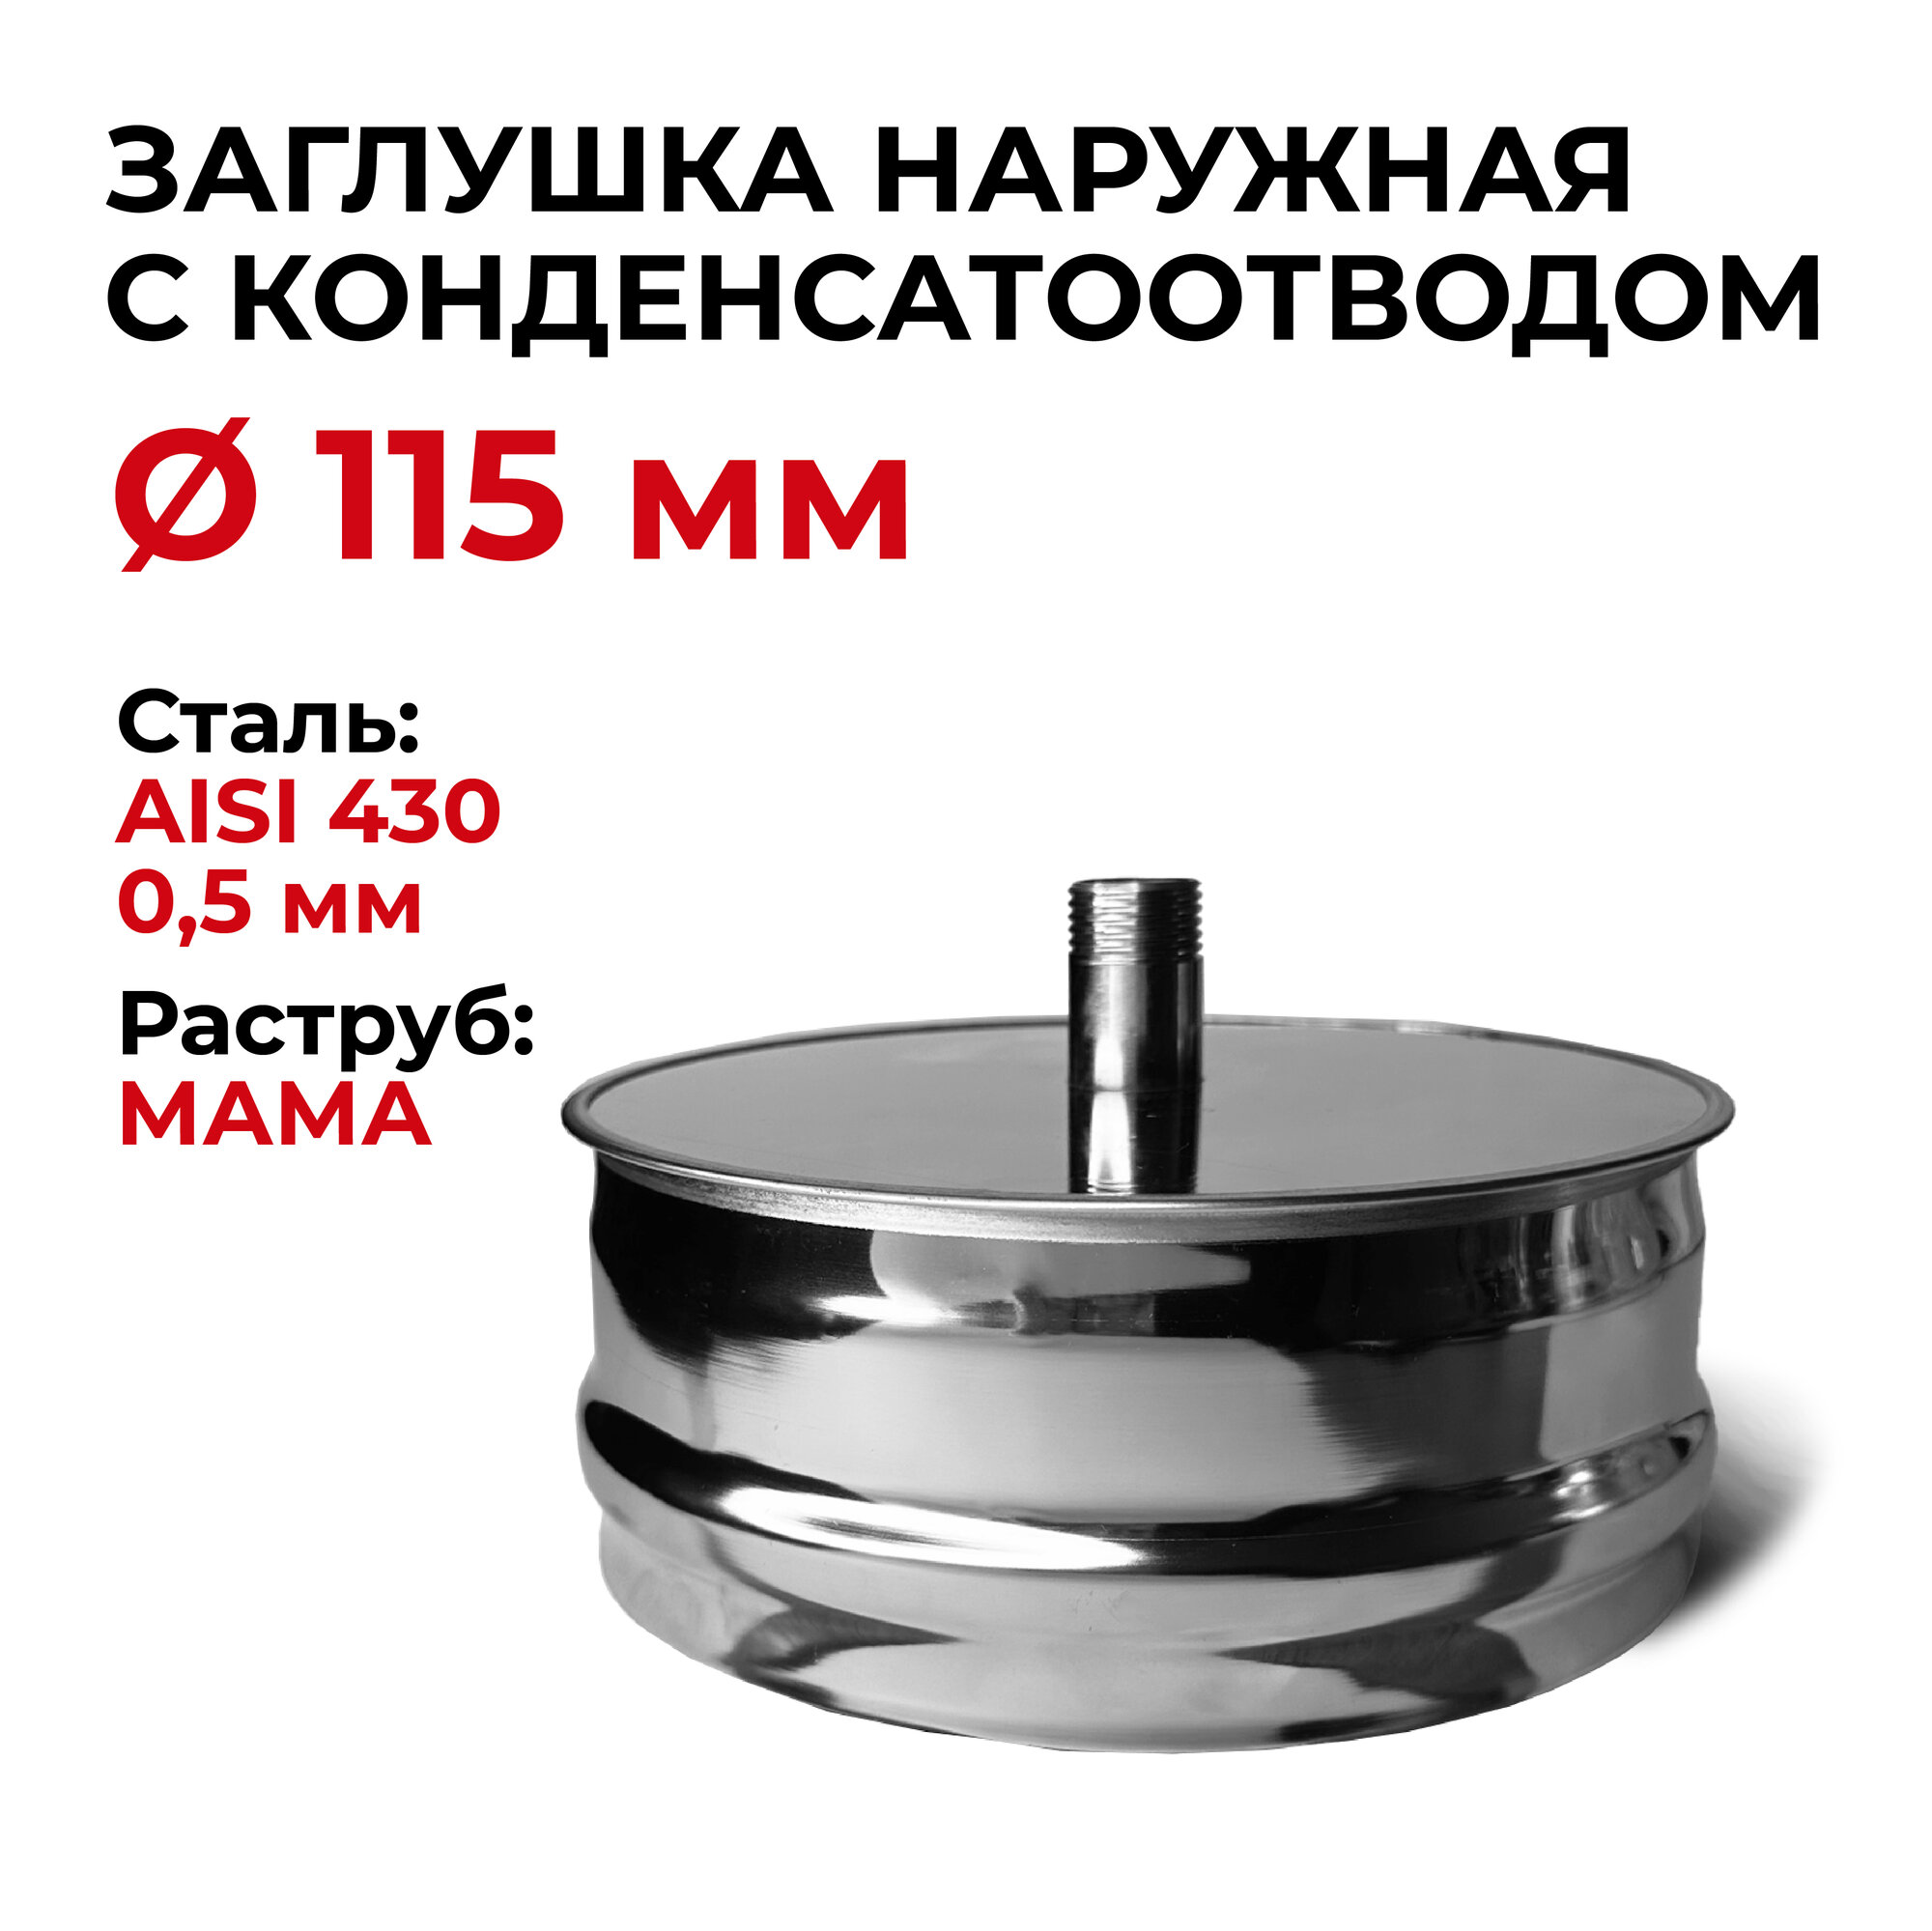 Заглушка с конденсатоотводом 1/2 наружная мама D 115 мм 